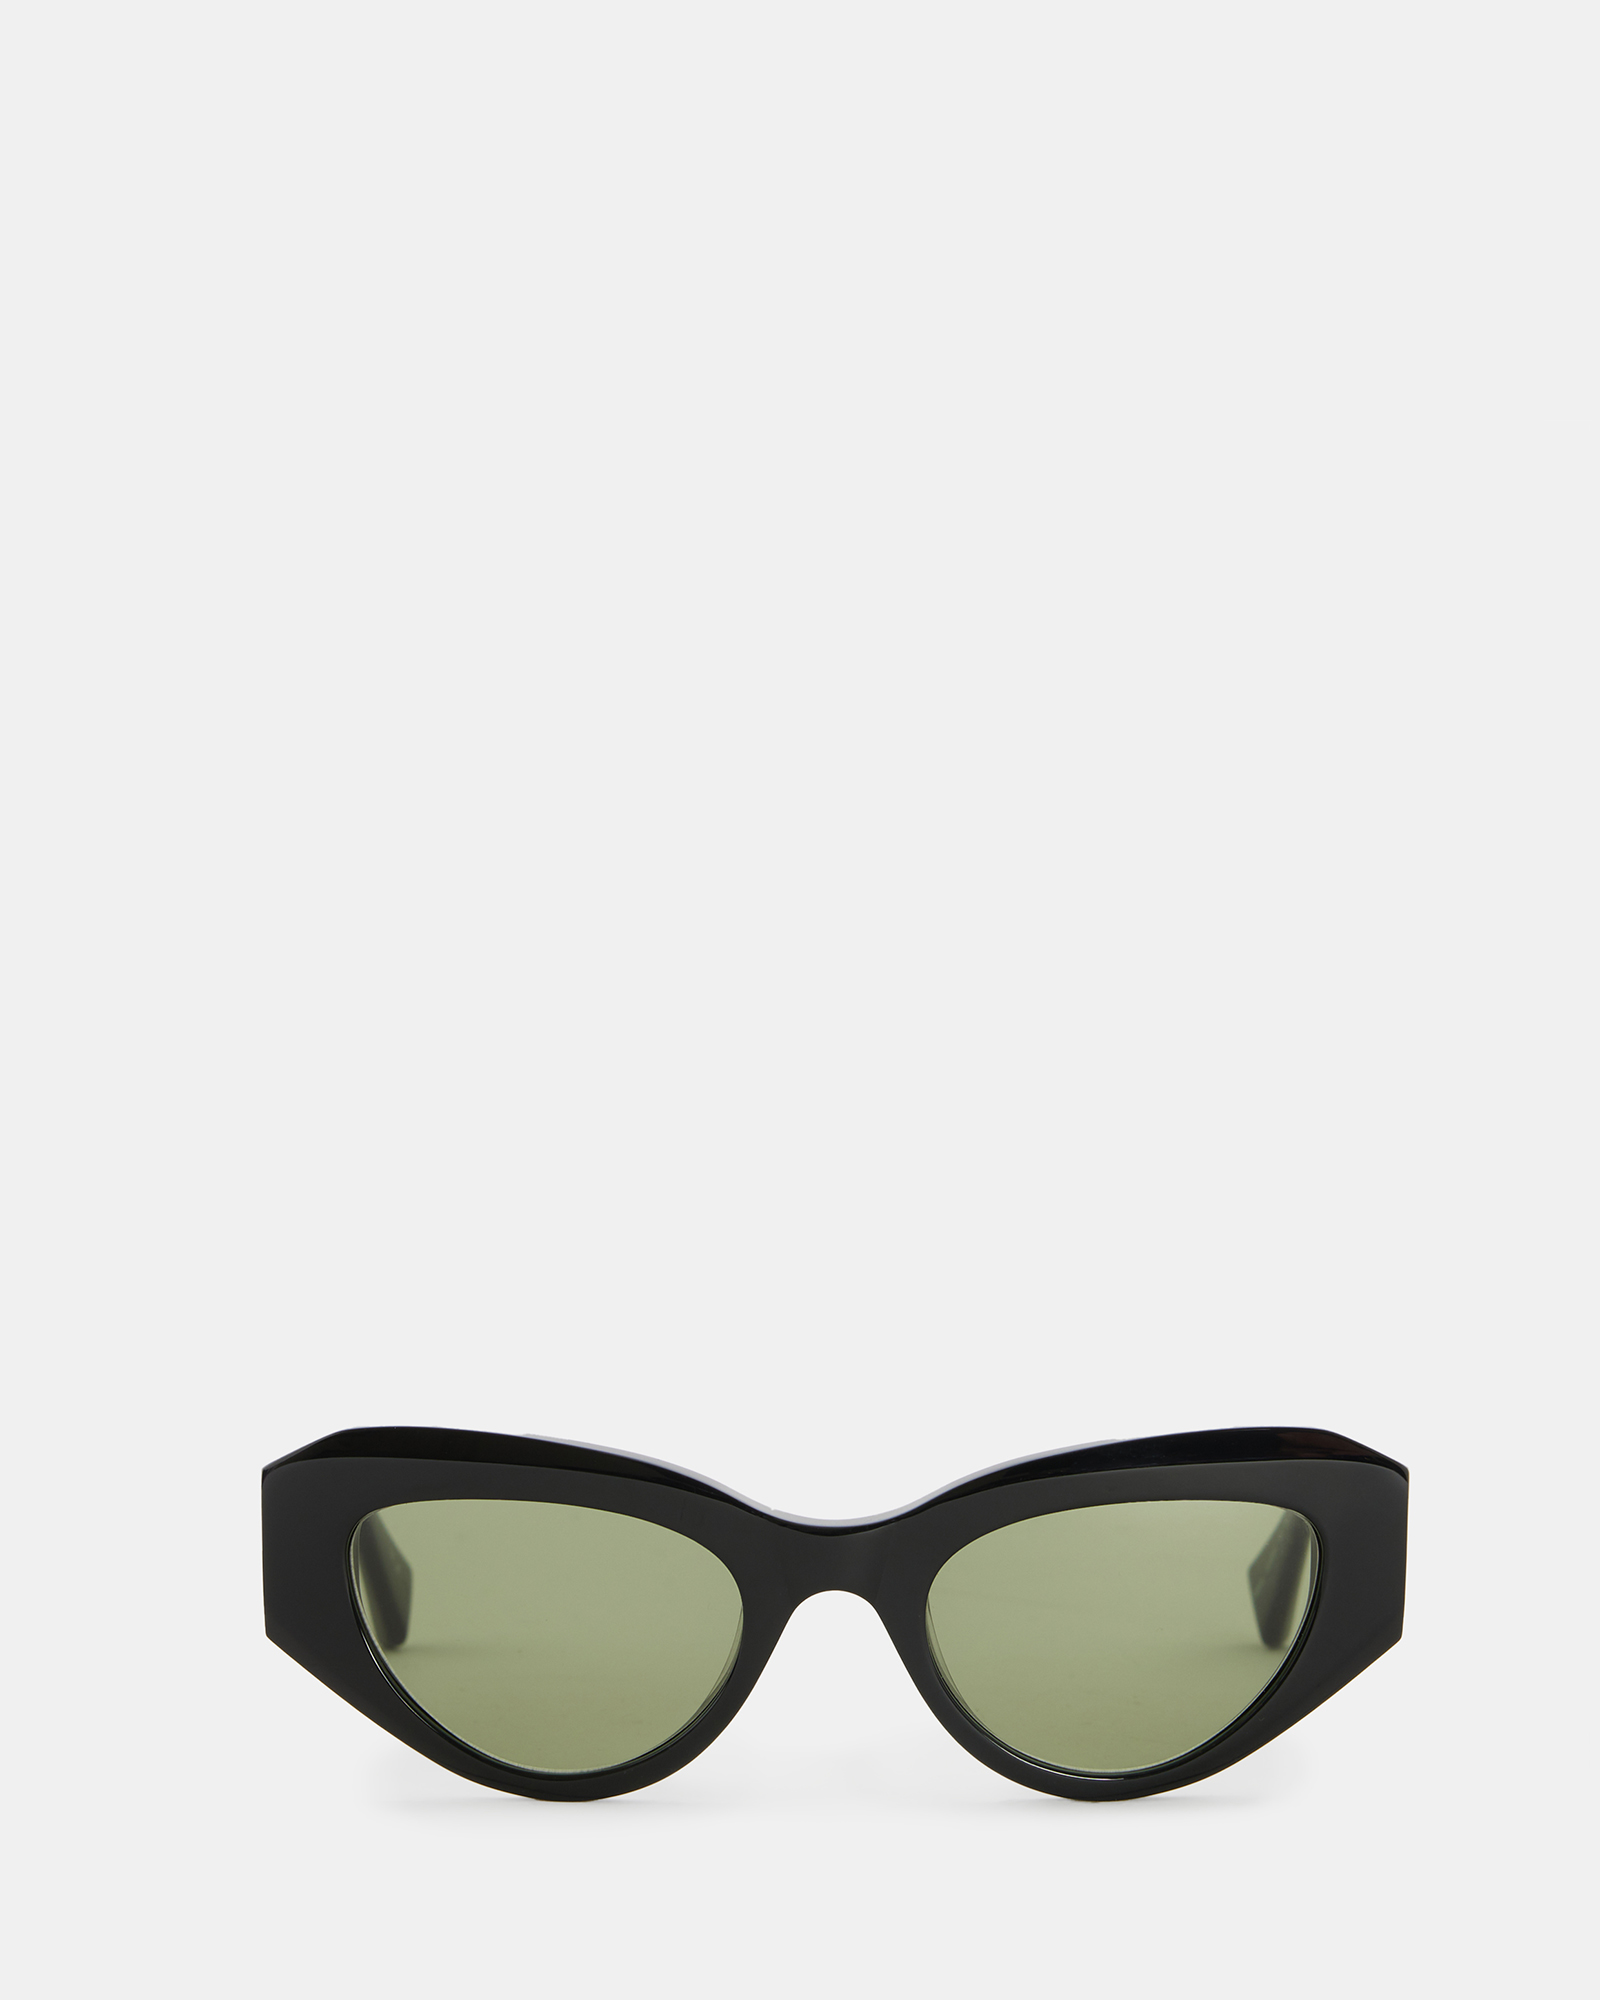 AllSaints Calypso Bevelled Cat Eye Sunglasses,, GLOSS BLACK